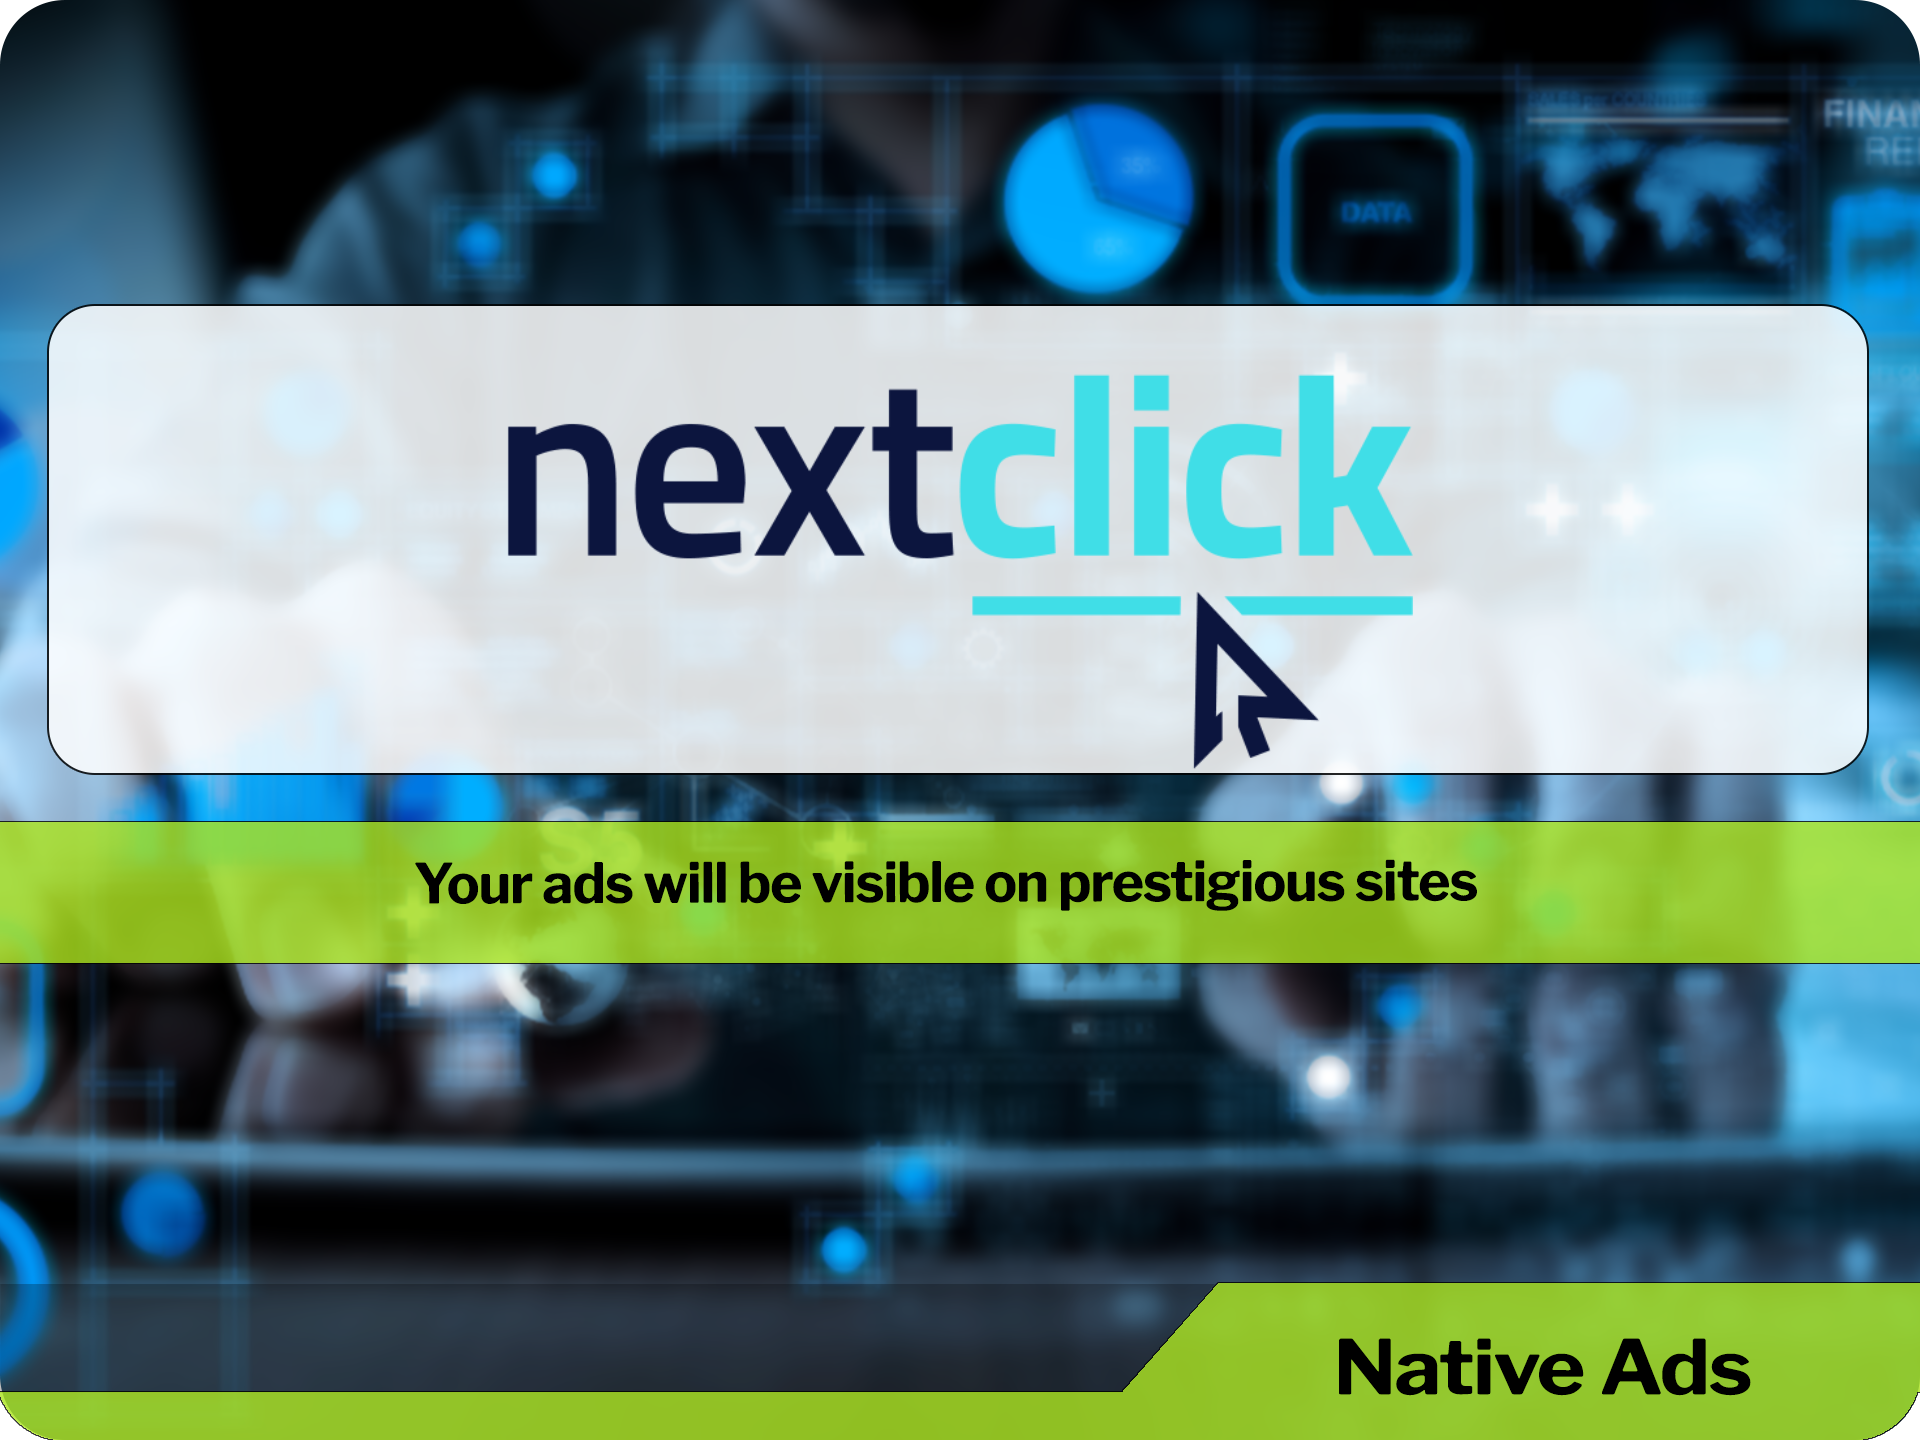 Nextclick reaches millions of Internet users